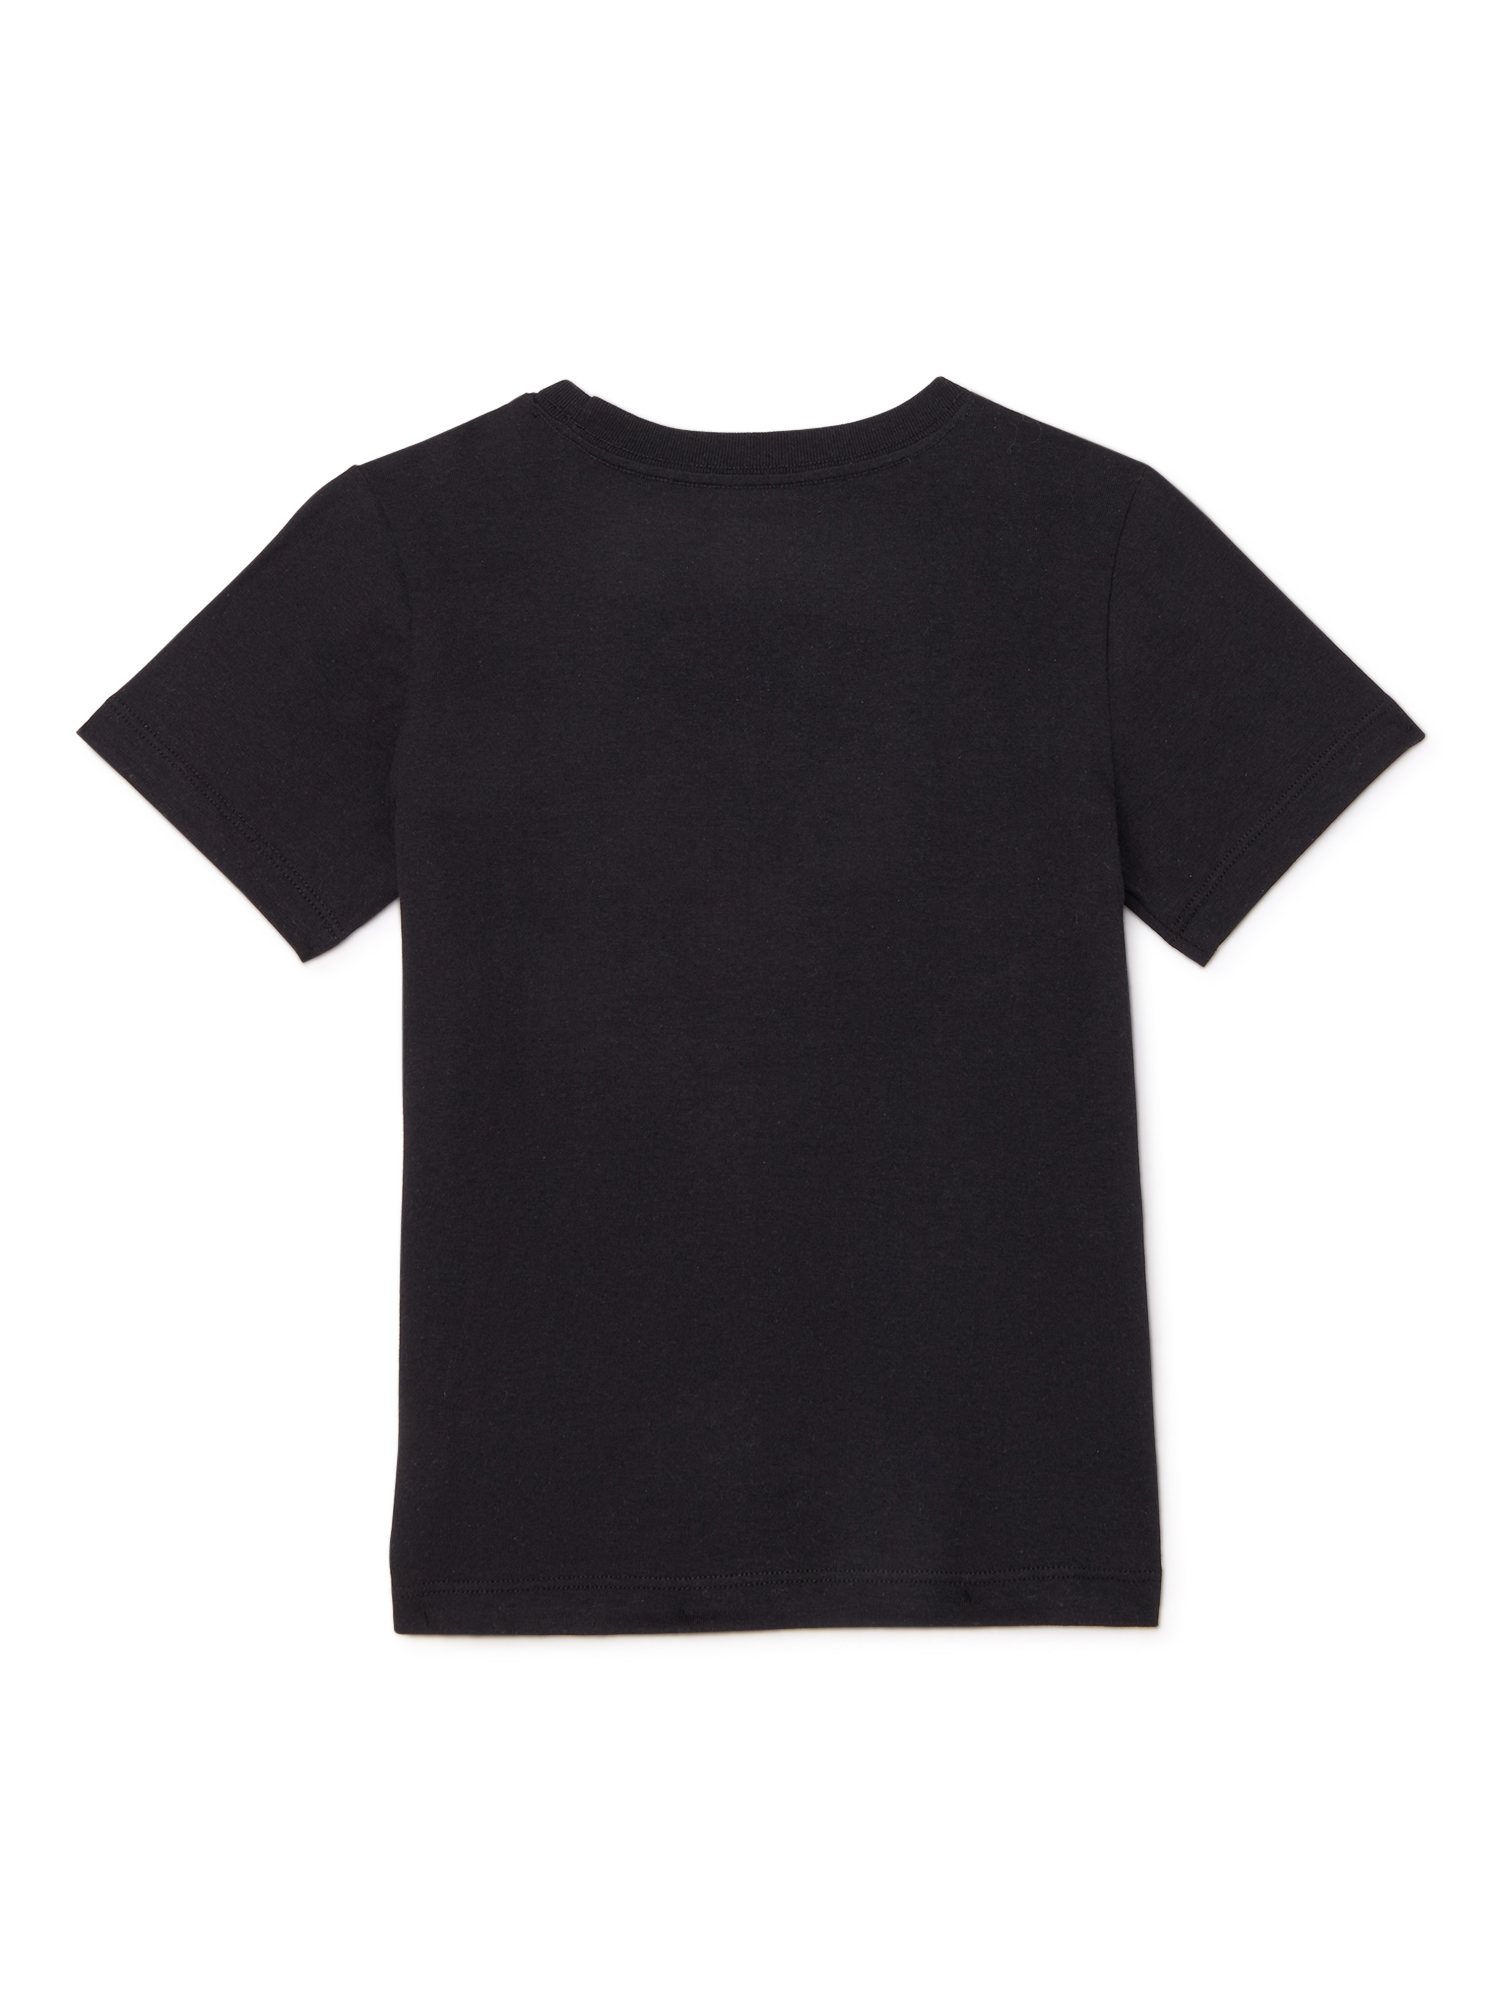 Ryan's World Boys Short Sleeve Graphic T-Shirts, 3 Pack Sizes 4-8 - image 4 of 7